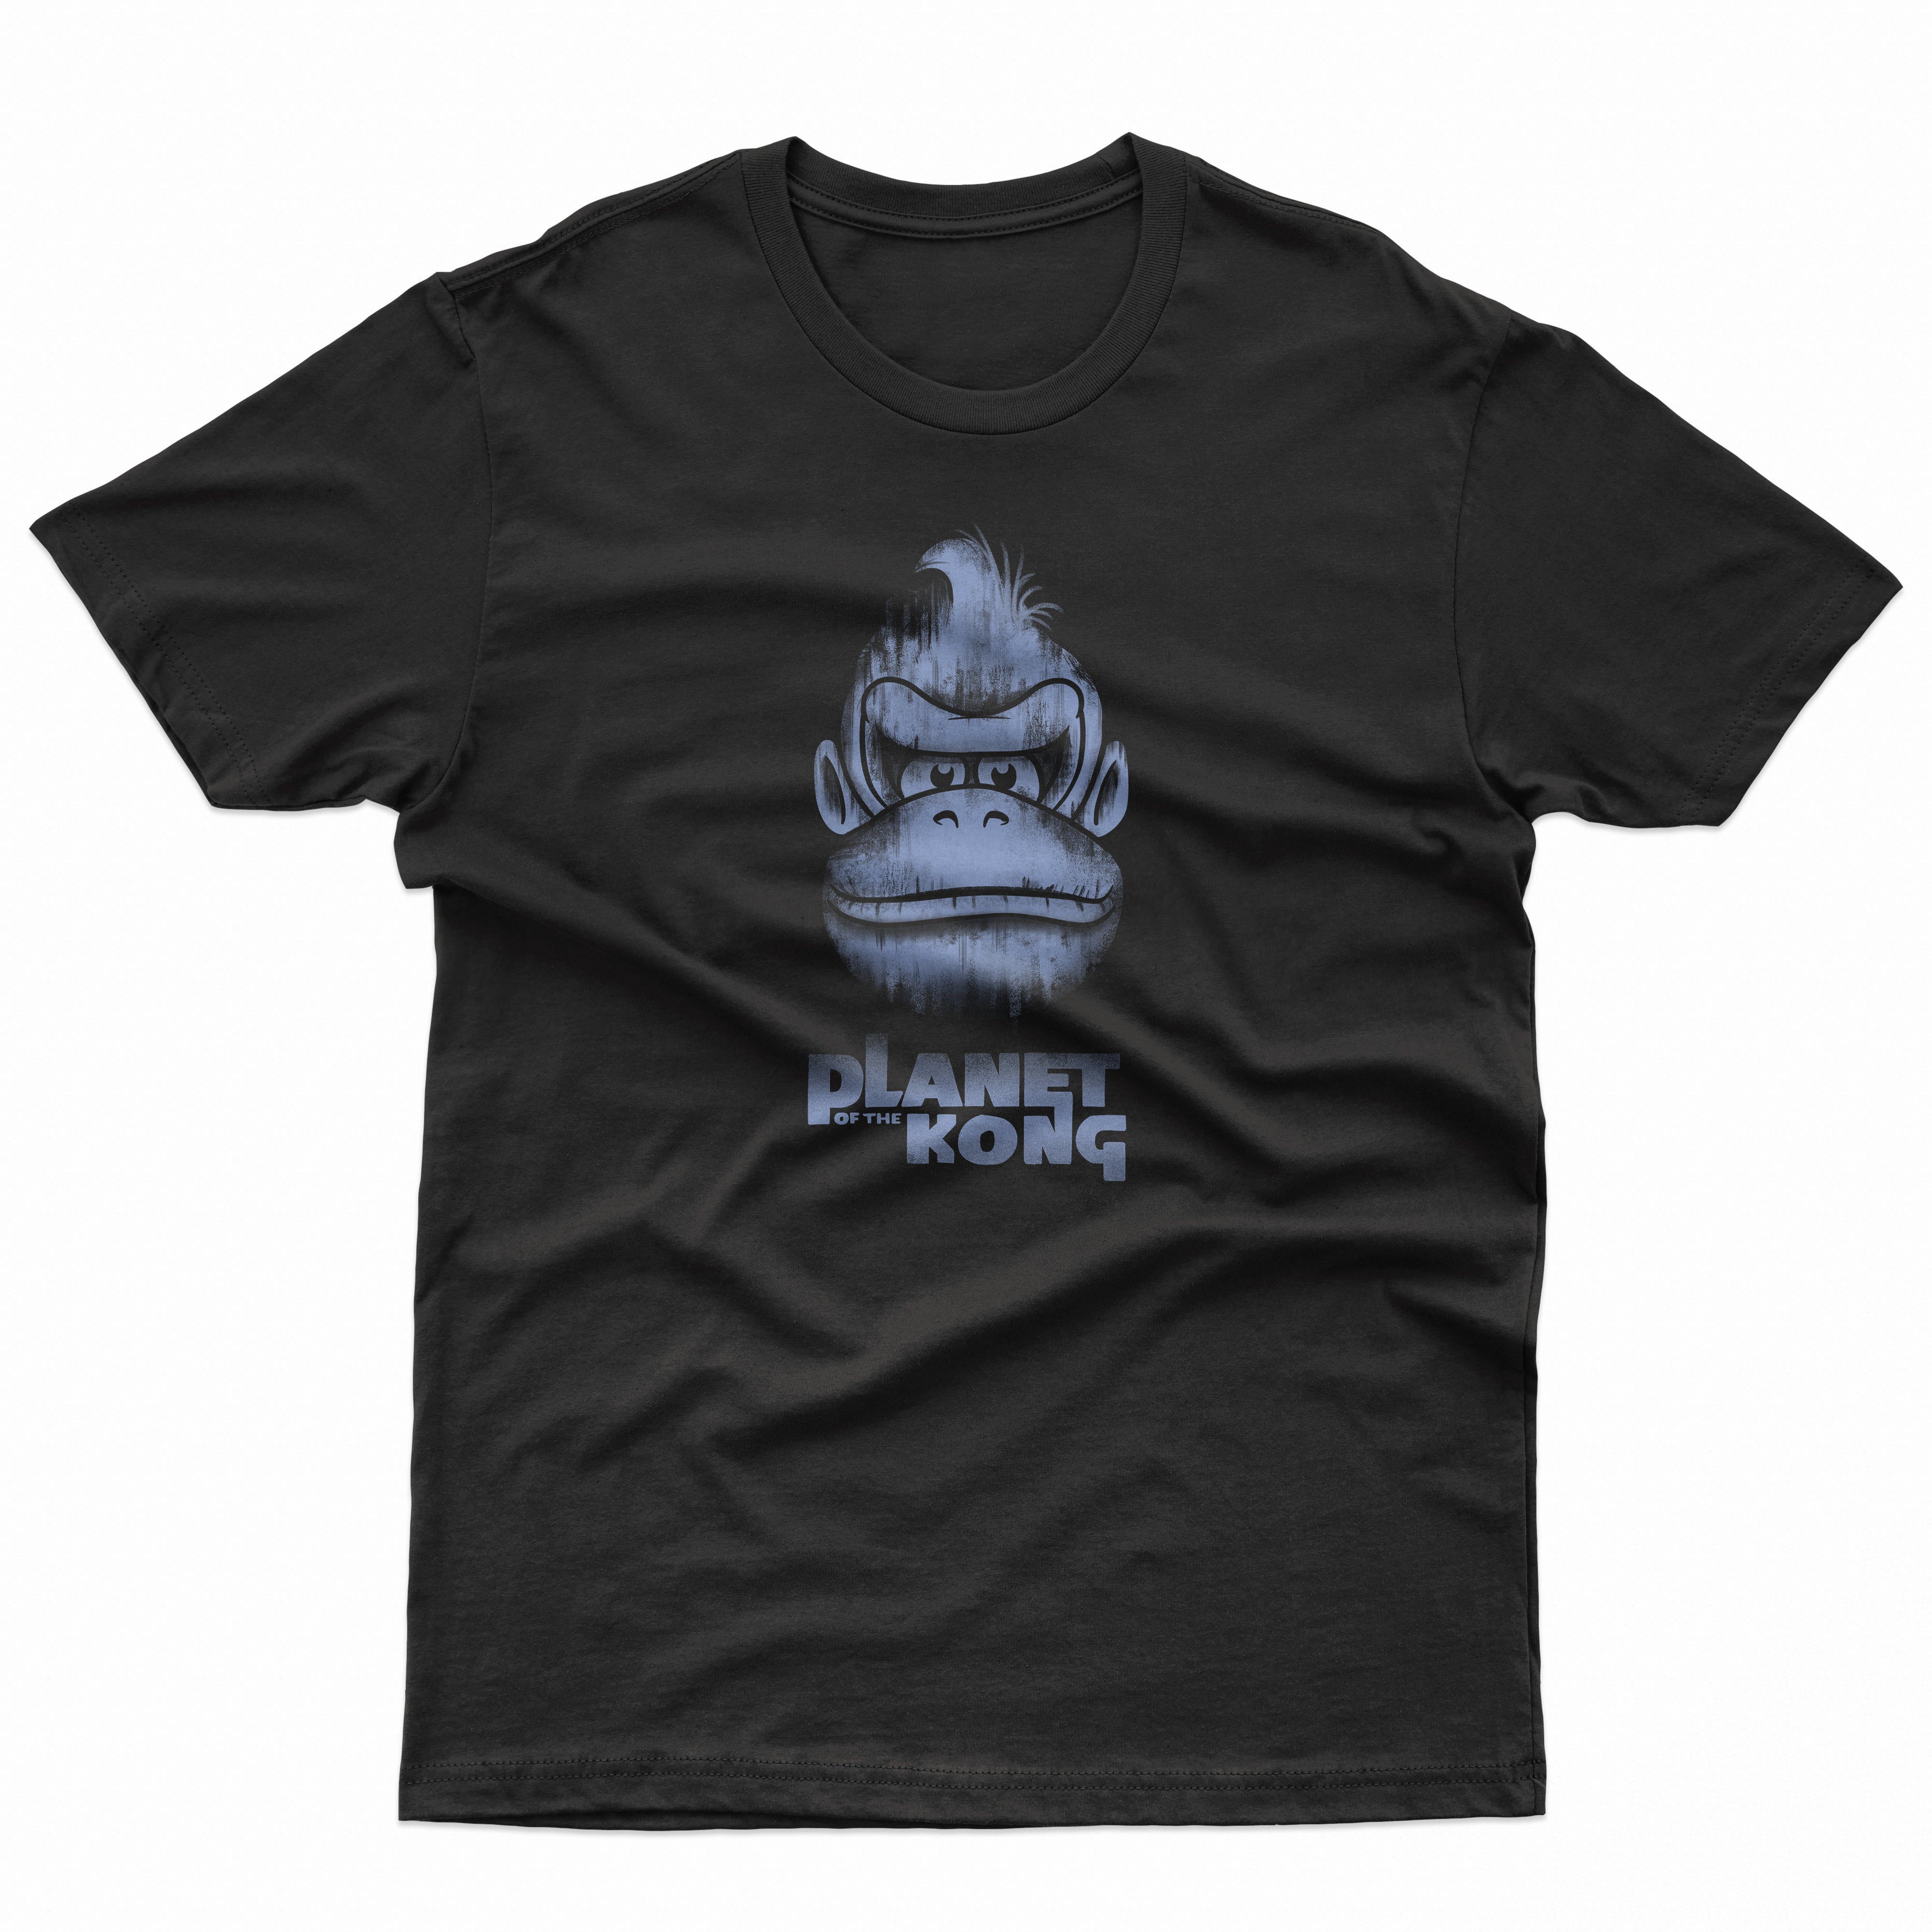 Planet of the Kong Kids T Shirt